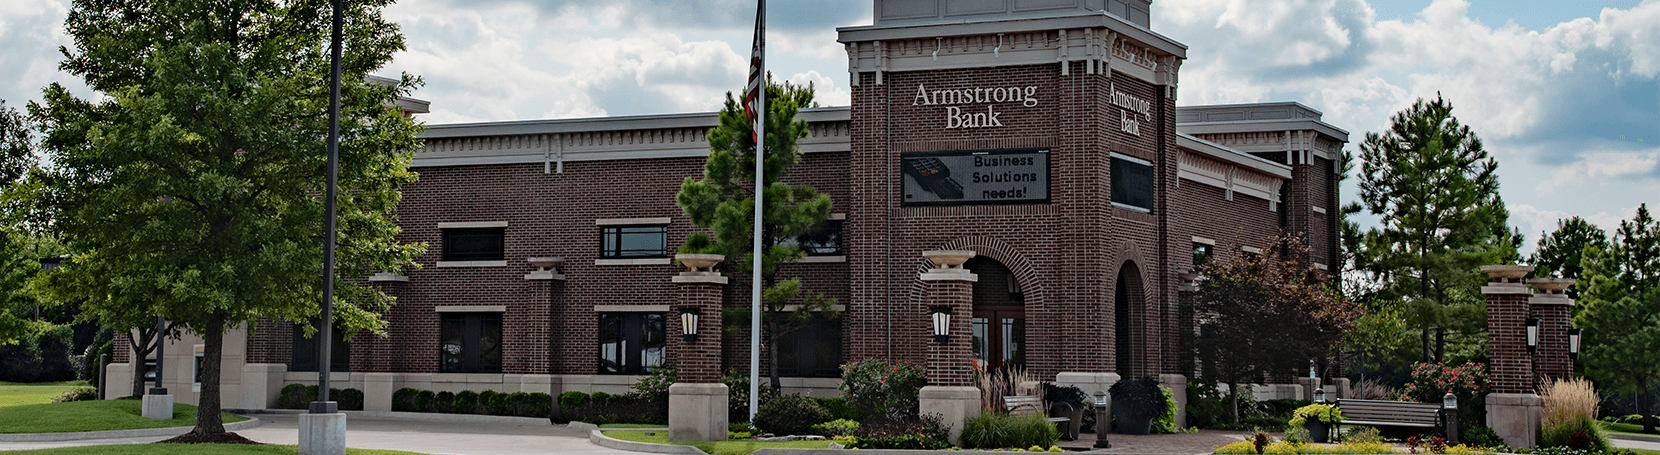 Armstrong Bank building in Bartlesville, Oklahoma.